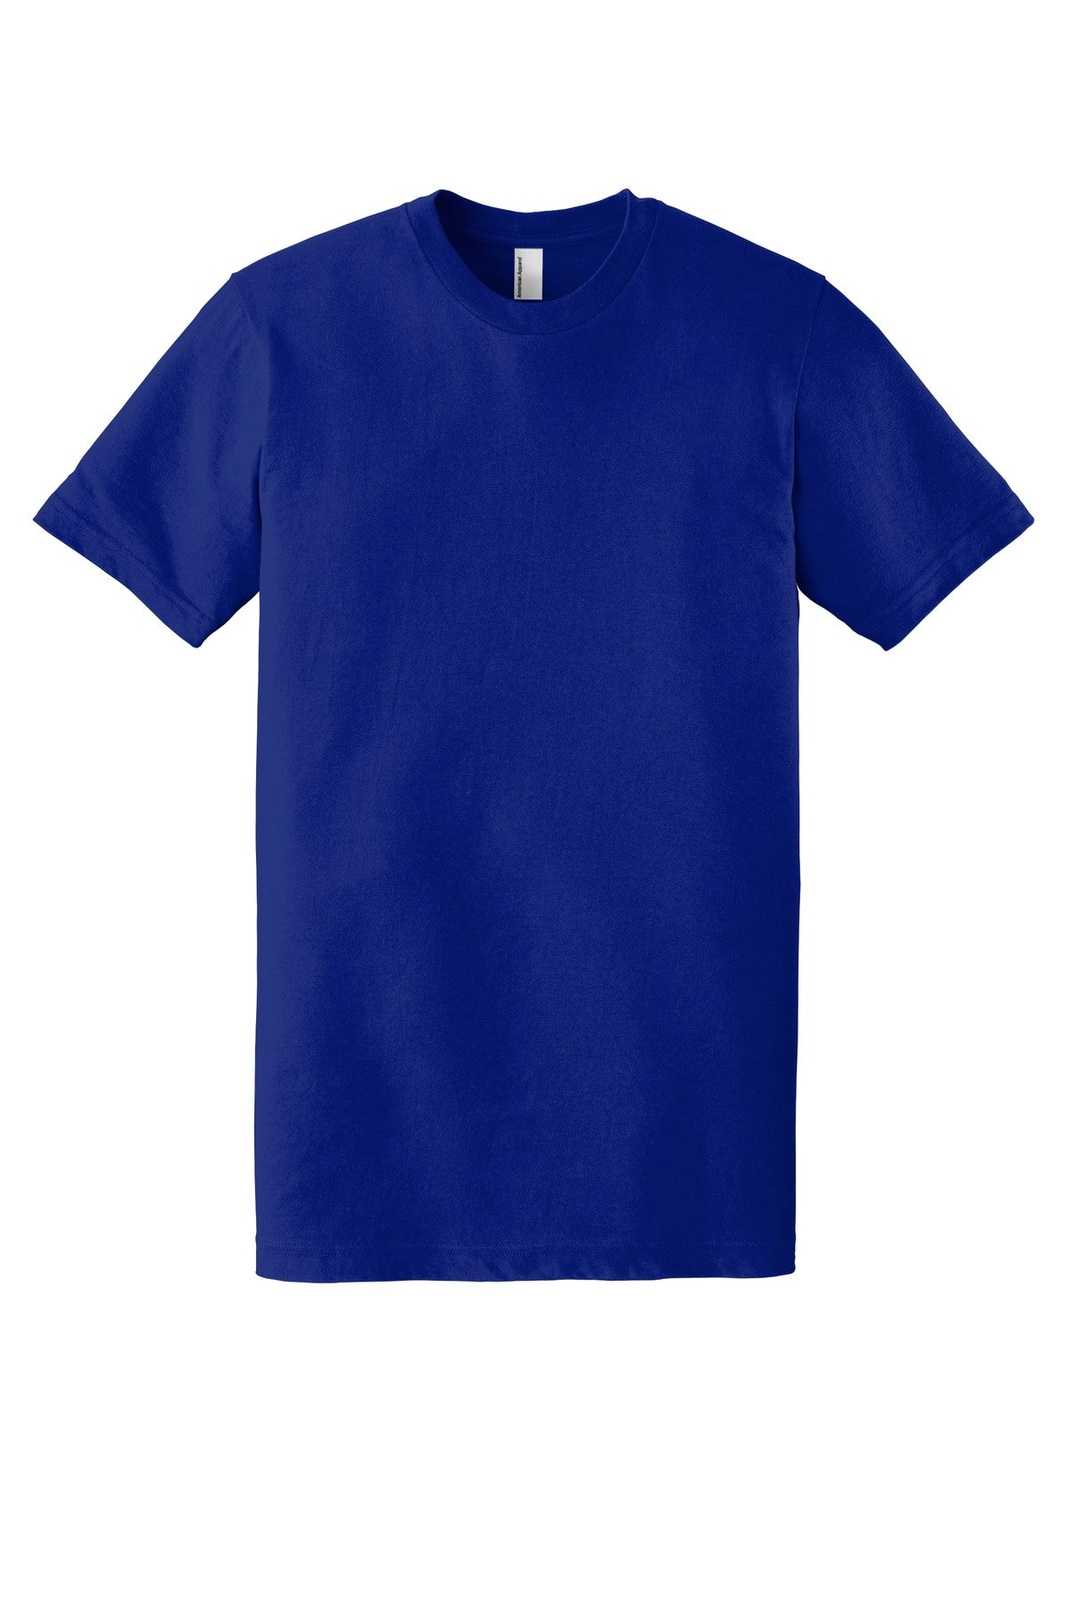 American Apparel 2001W Fine Jersey T-Shirt - Lapis - HIT a Double